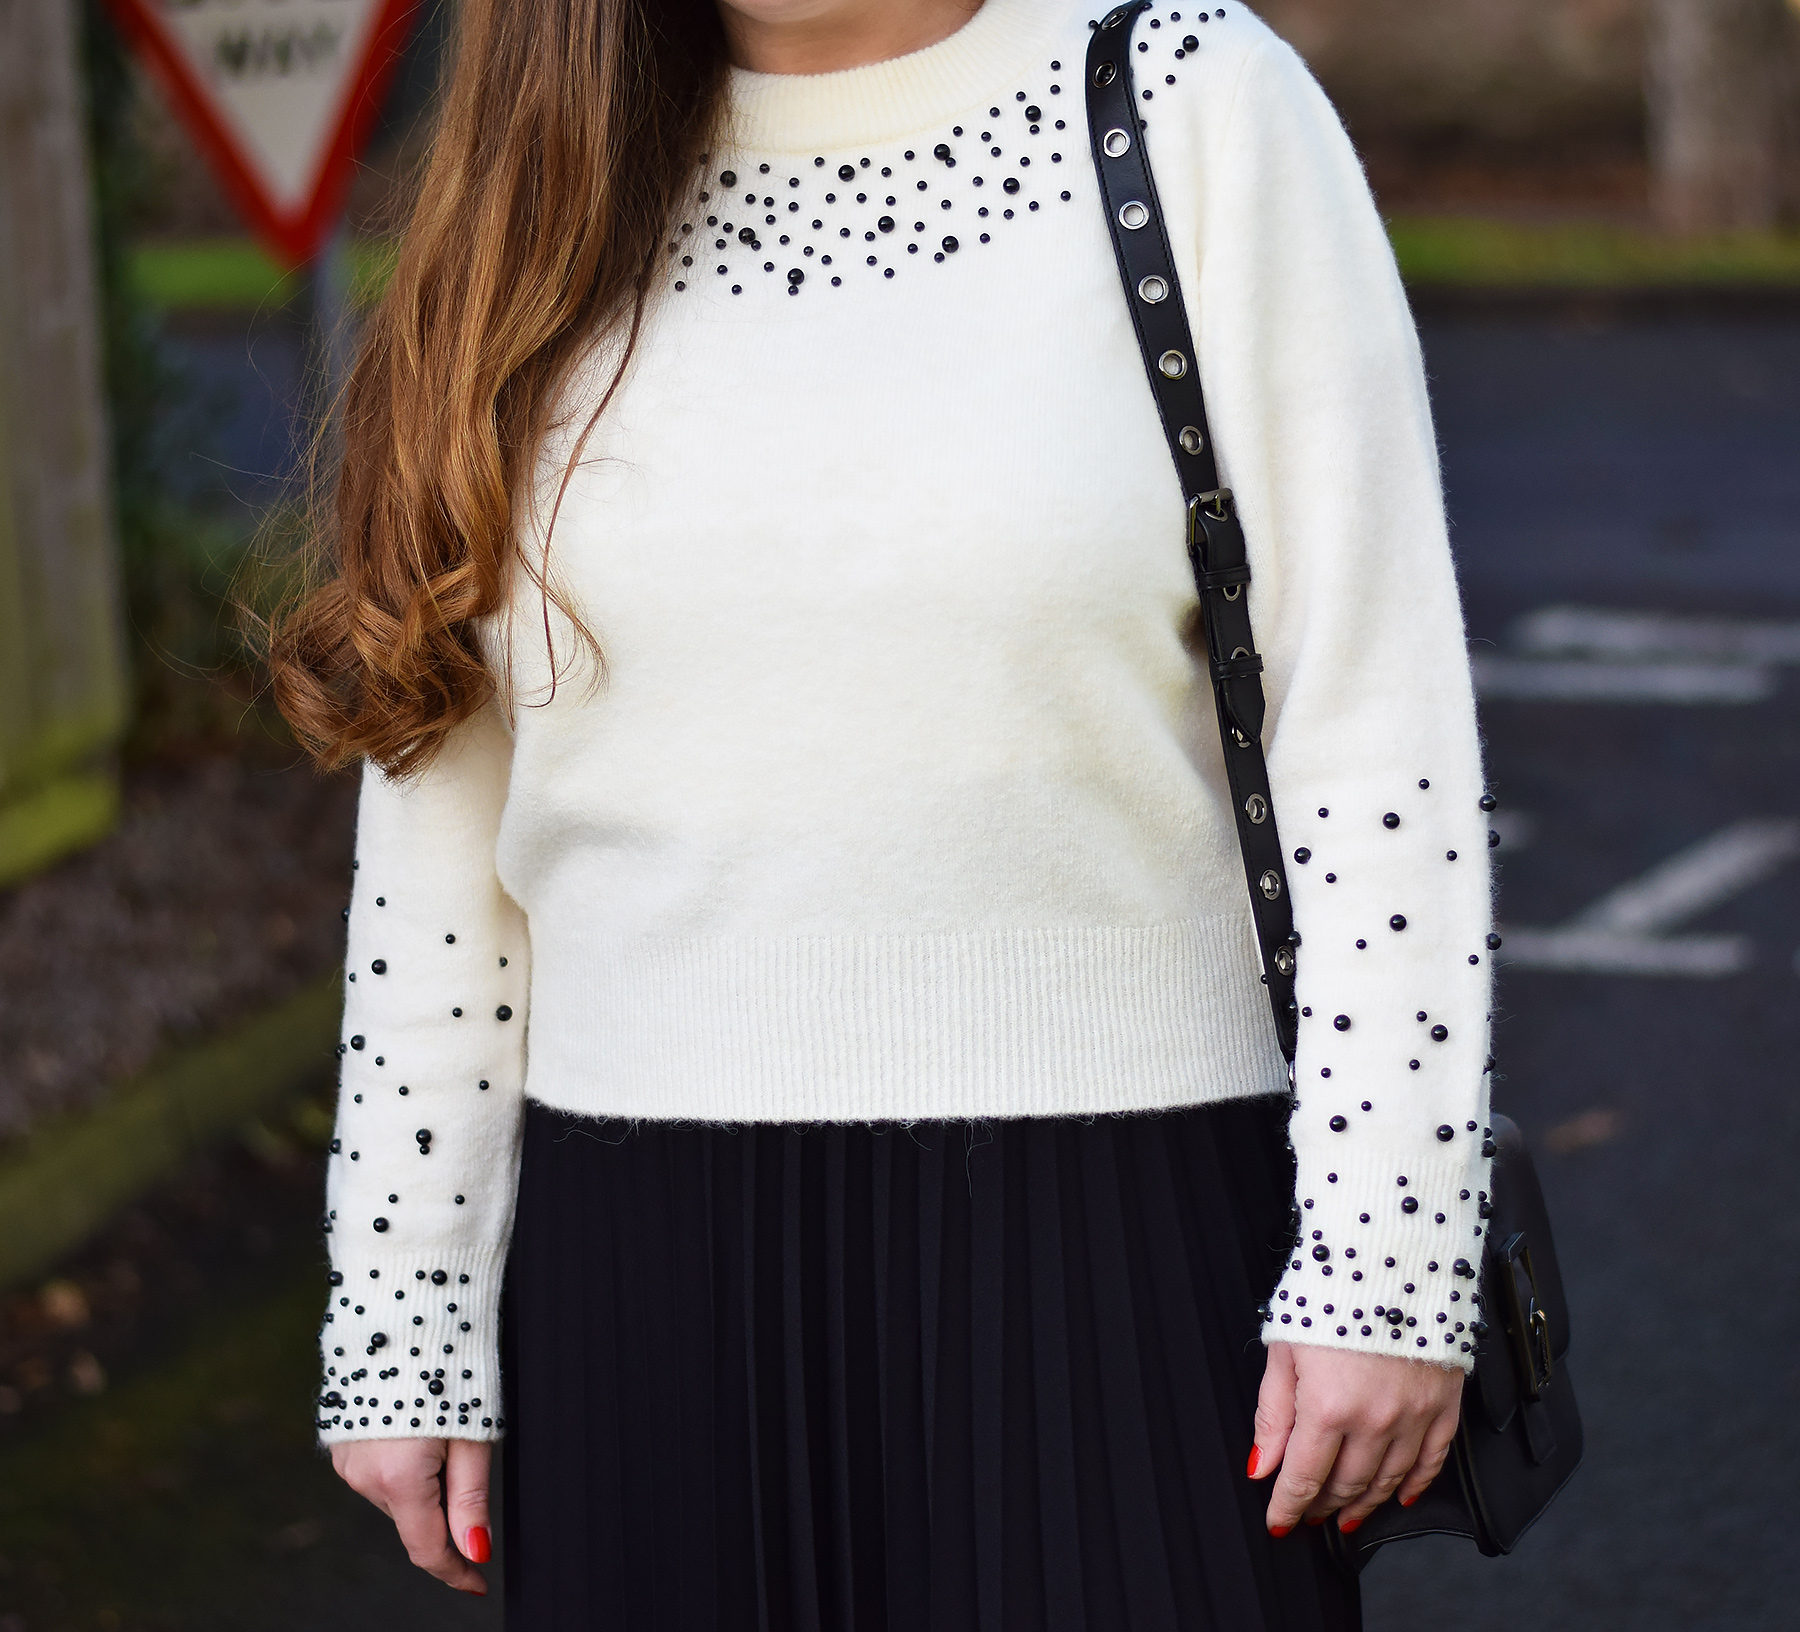 Jacquard flower - UK fashion blogger wearing H&M aw17 bead embellished jumper